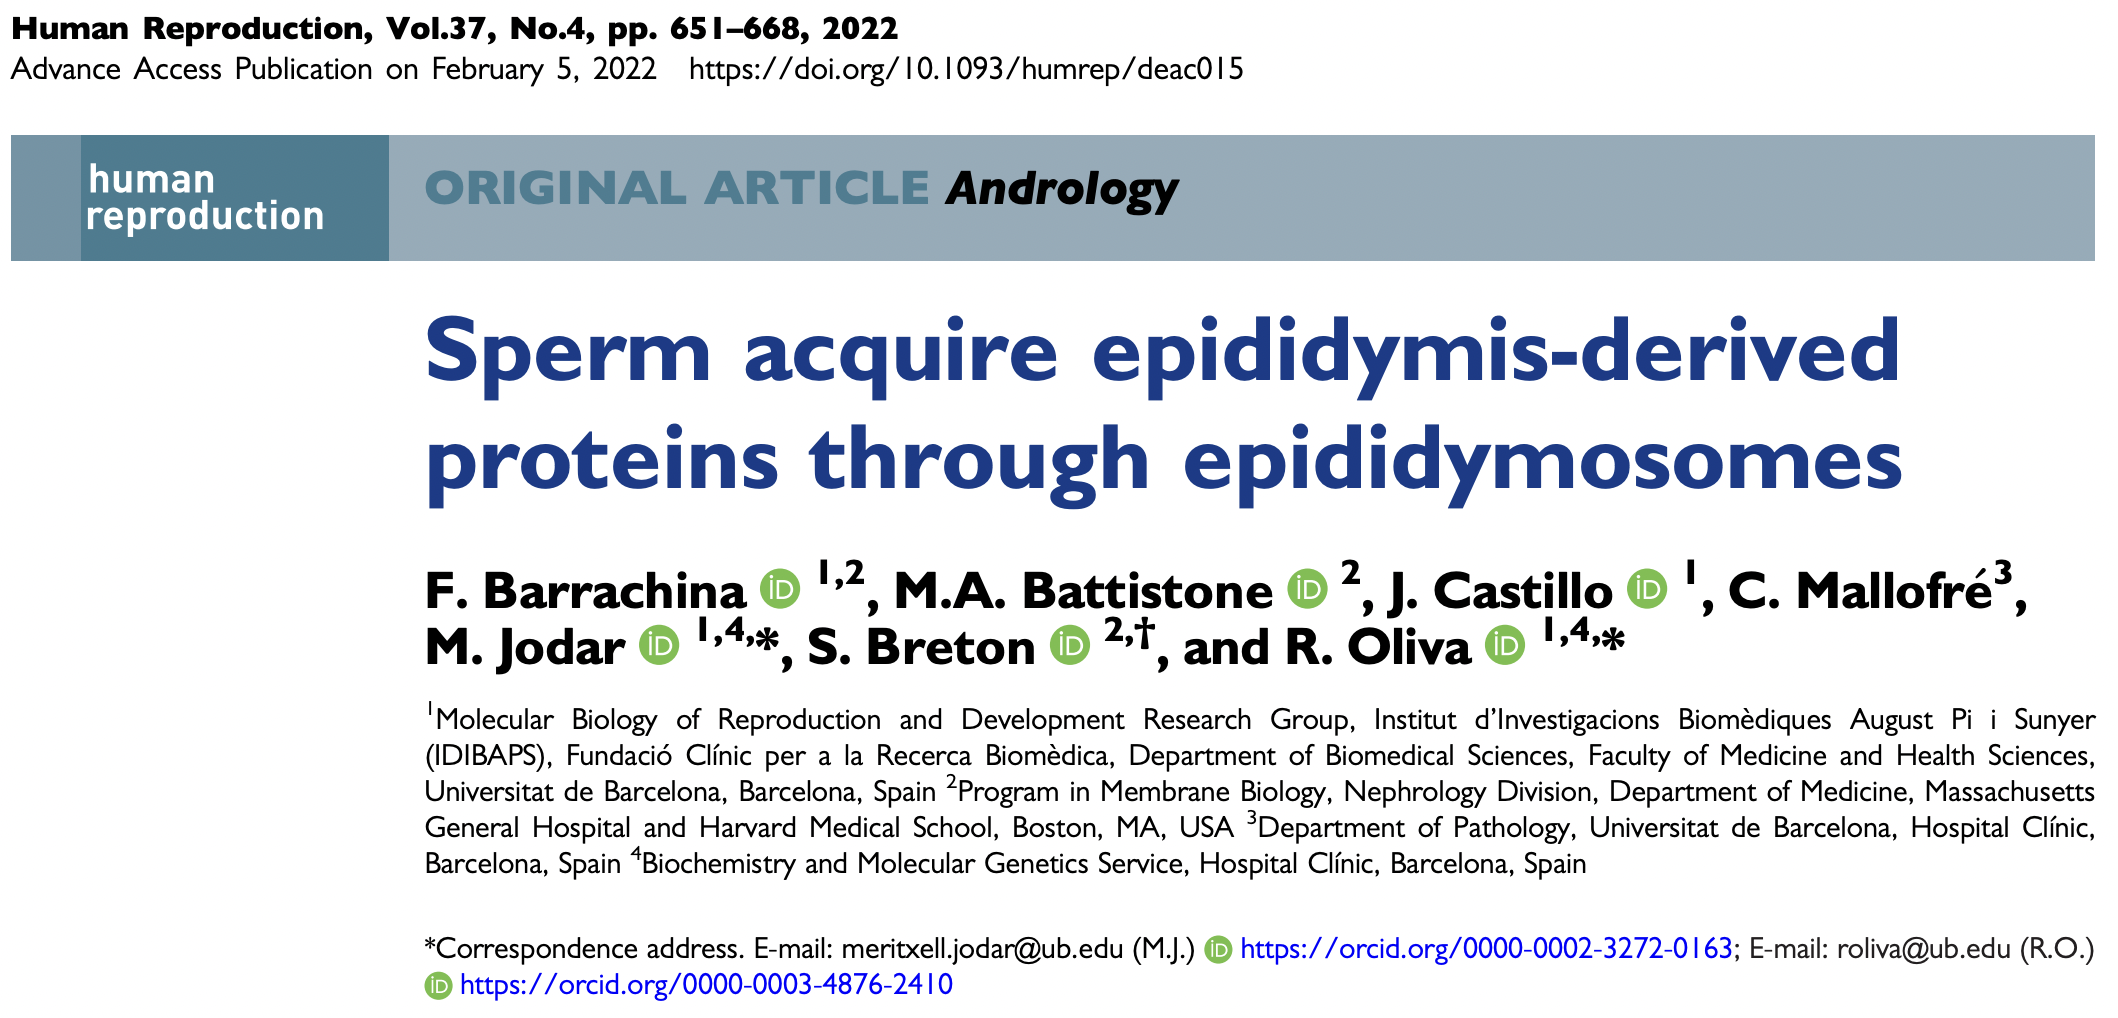 The sperm cell acquires proteins with epidydimal origin through epididymosomes